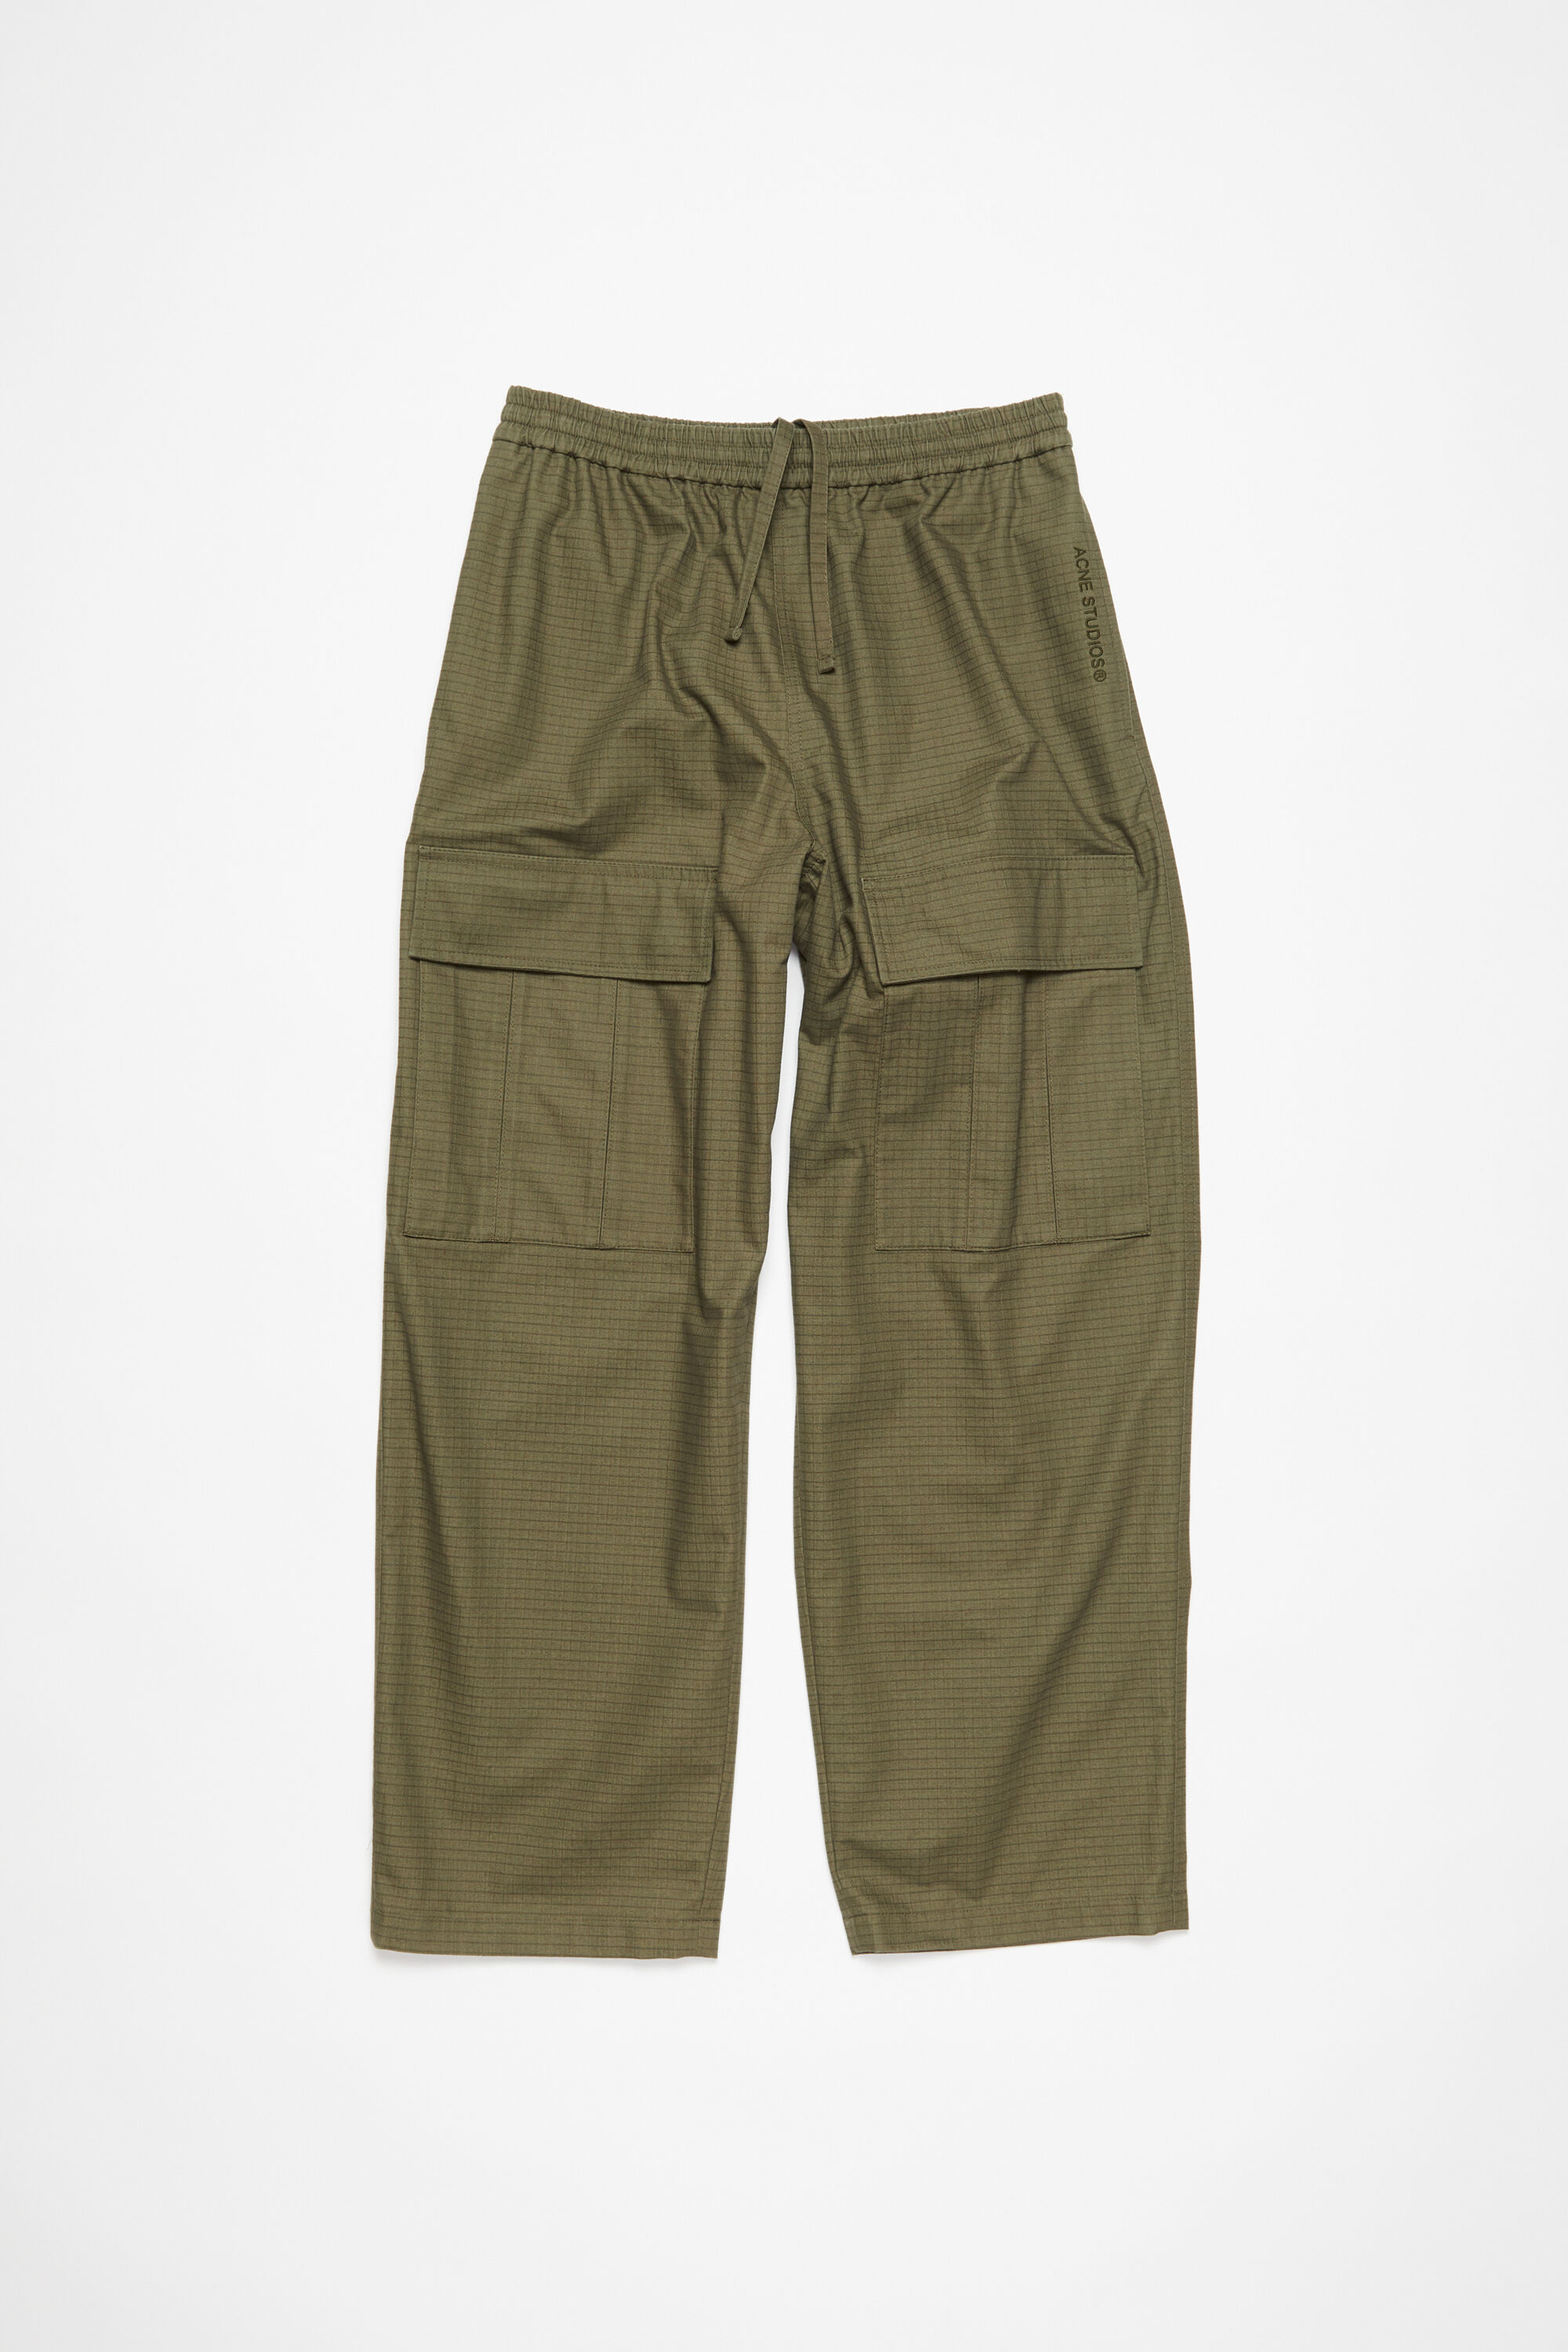 Men'S Cargo Trousers Work Wear Combat Safety Cargo 6 Pocket Full Pants Army  Green Xl g49 - Walmart.com